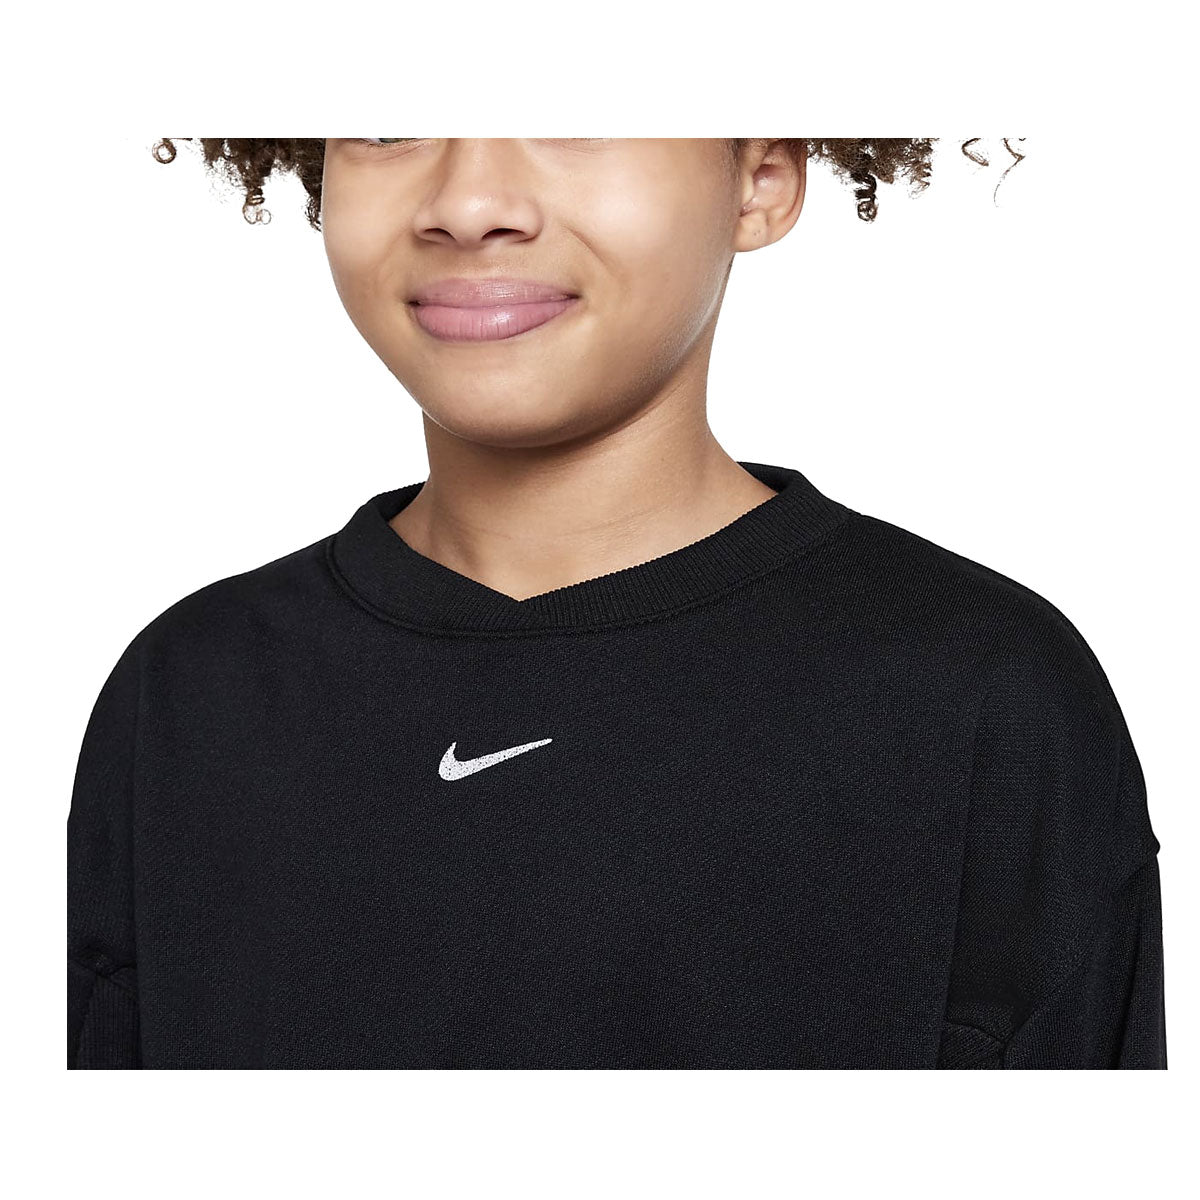 Nike Girls Yoga Dri-FIT Pullover Top